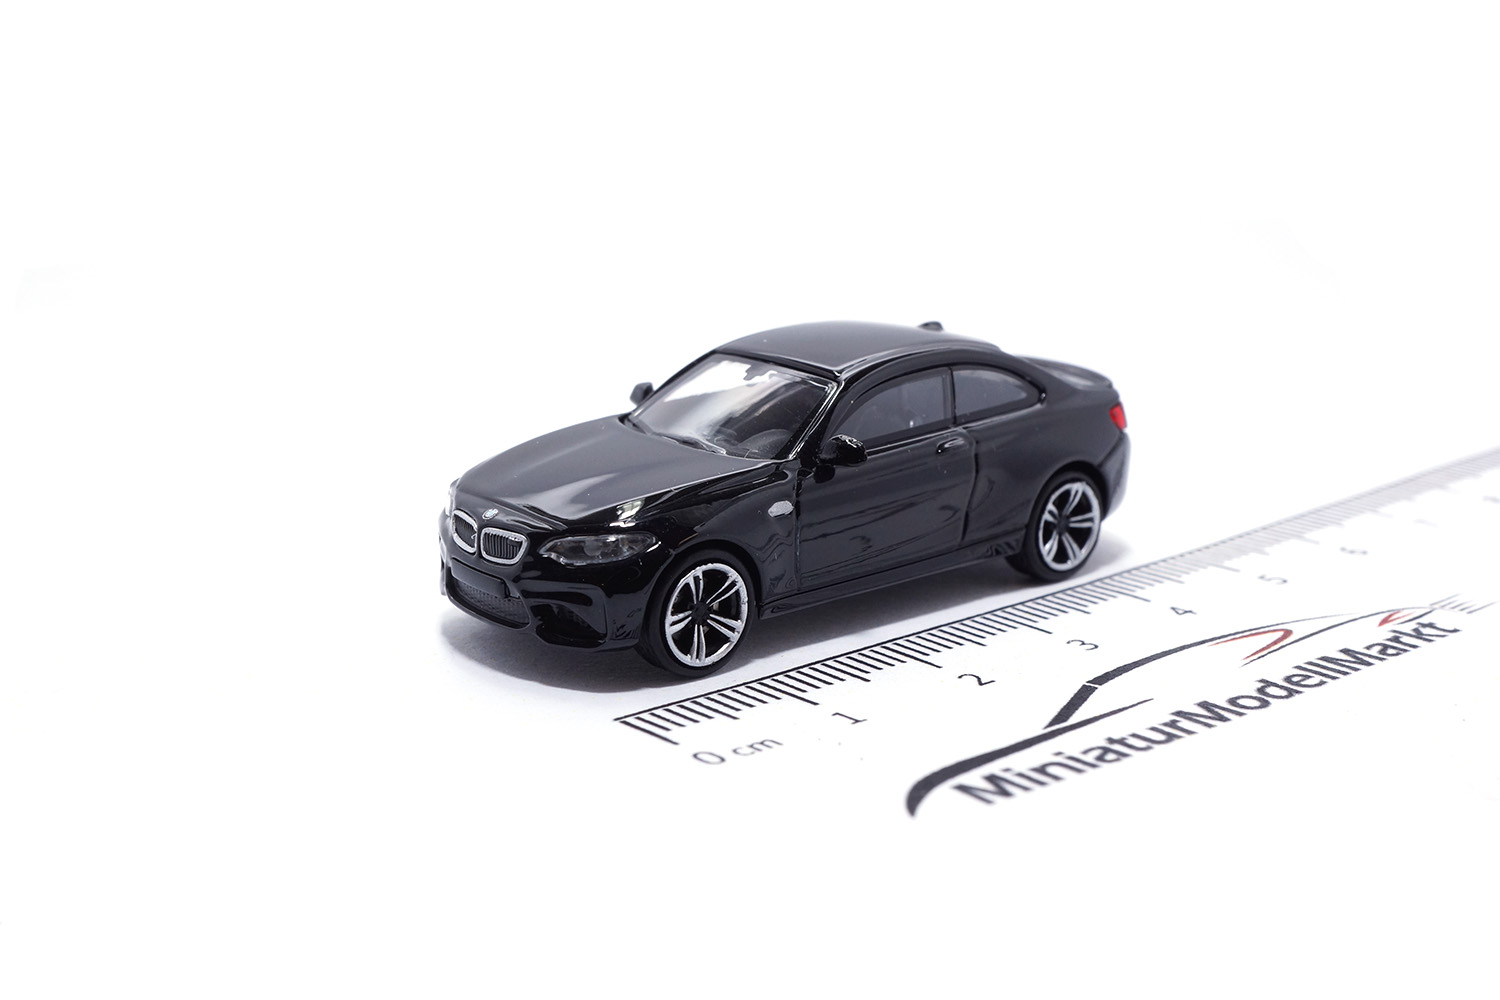 2016 schwarz metallic 870 027001-1:87 Minichamps BMW M2